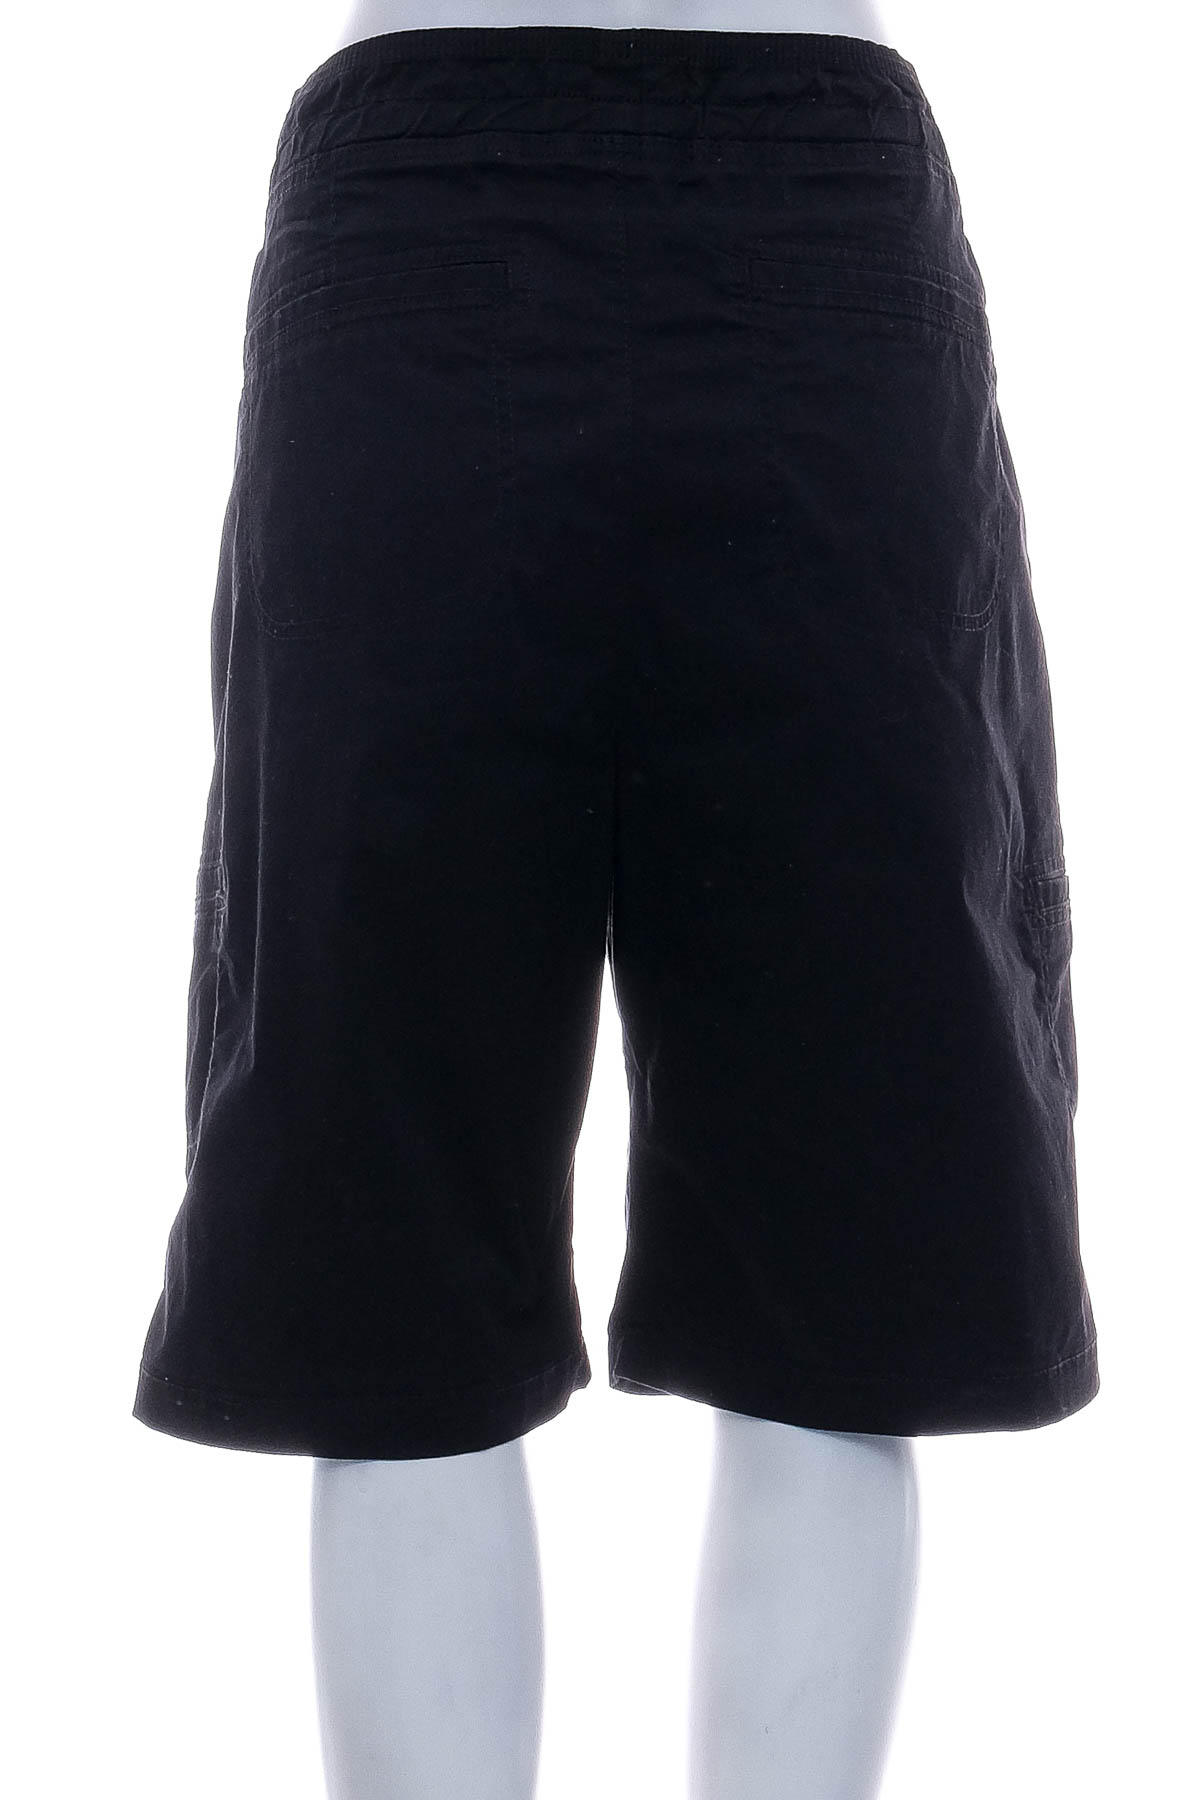 Female shorts - Lee - 1